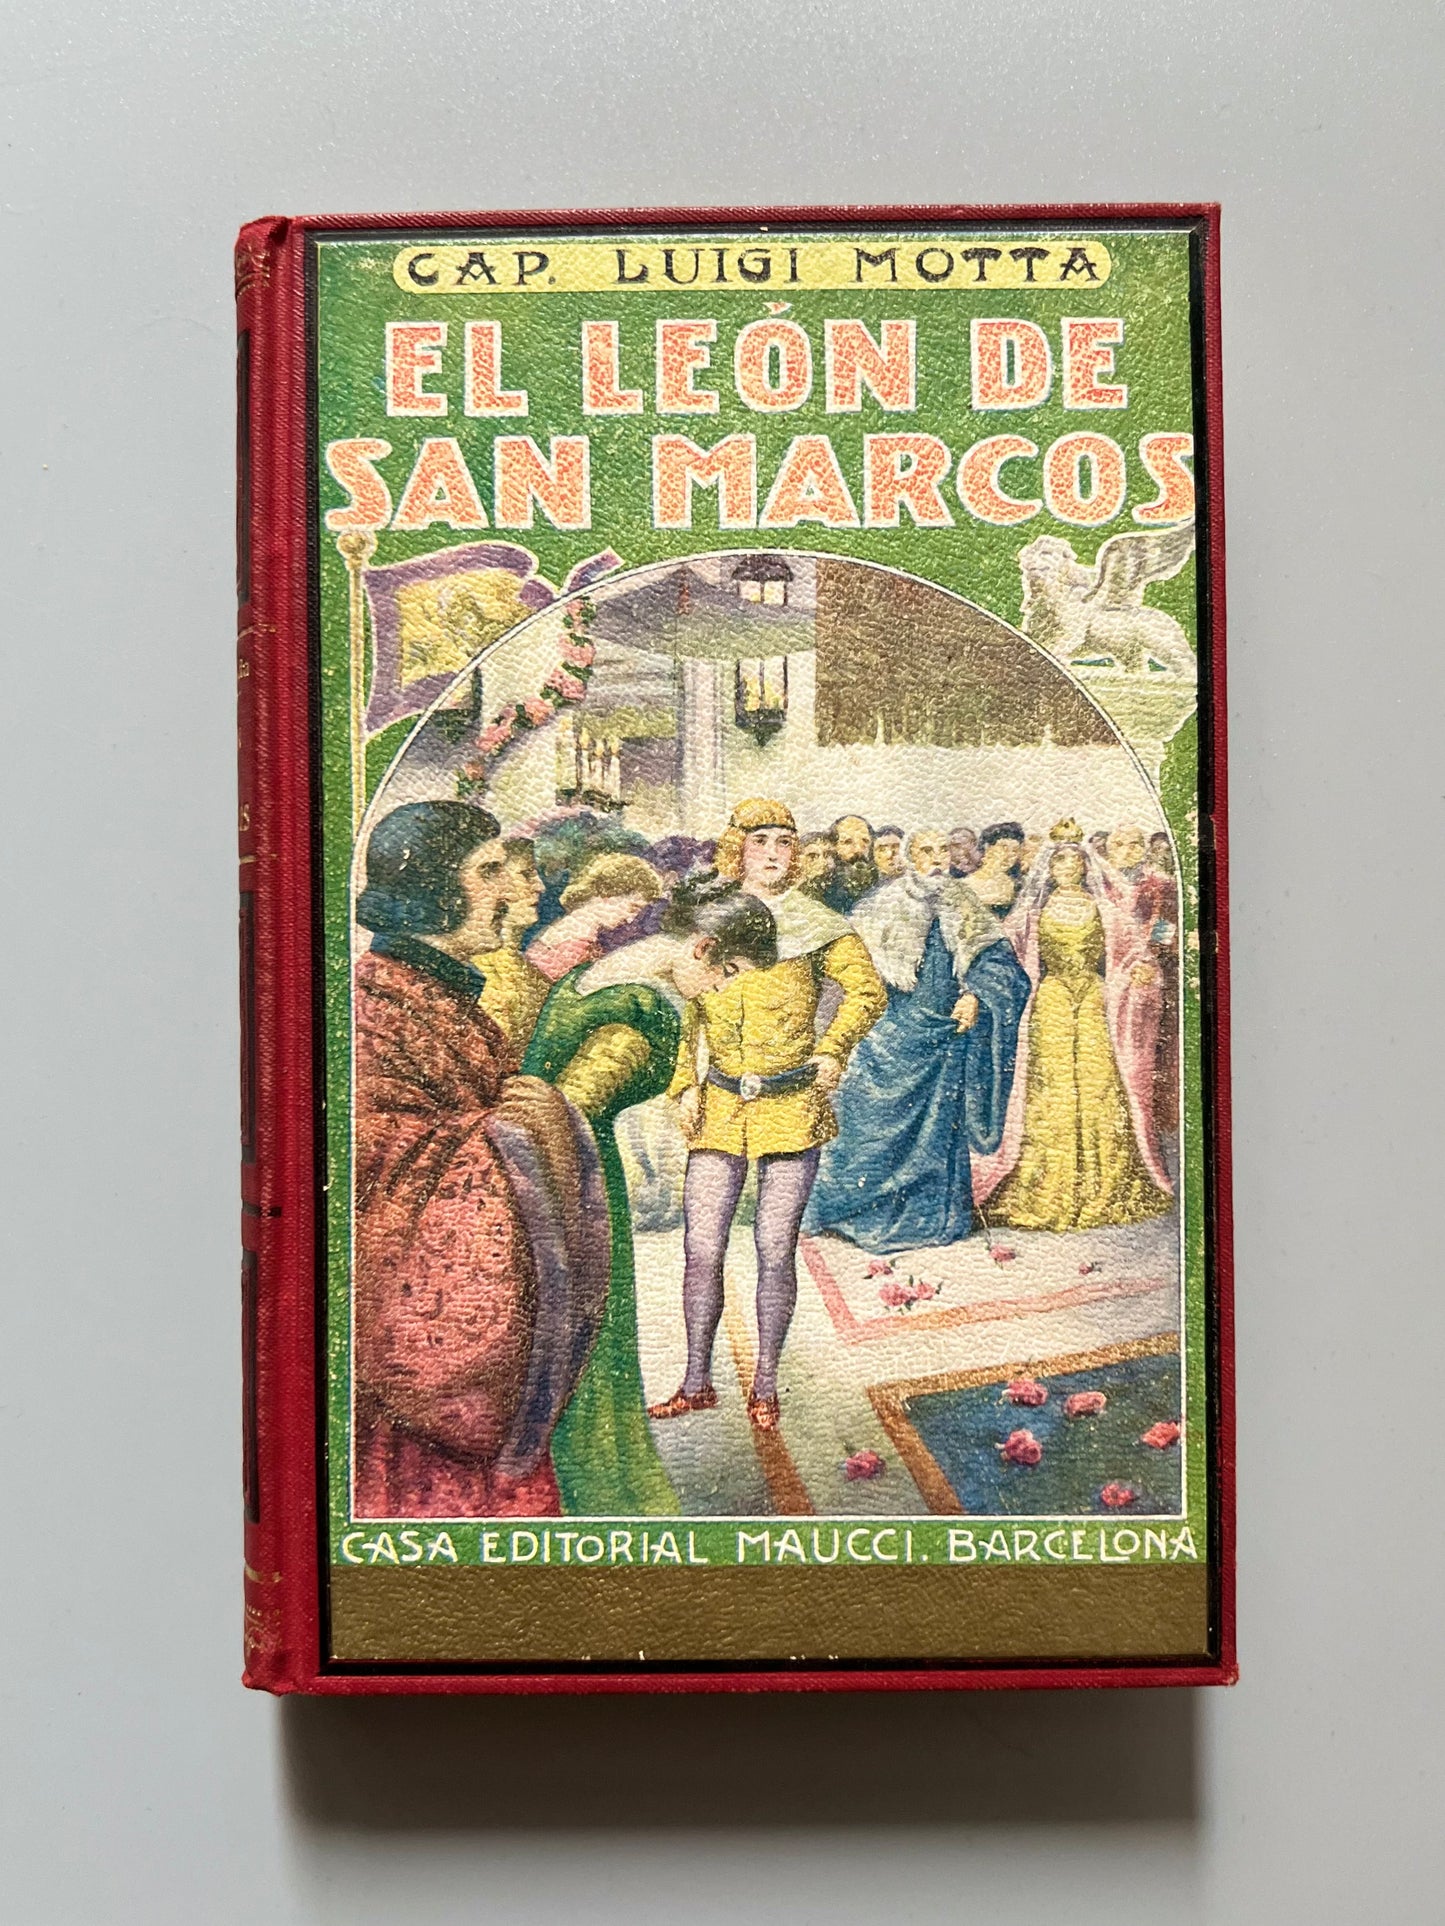 El león de San Marcos, Cap. Luigi Motta - Casa editorial Maucci, ca. 1910